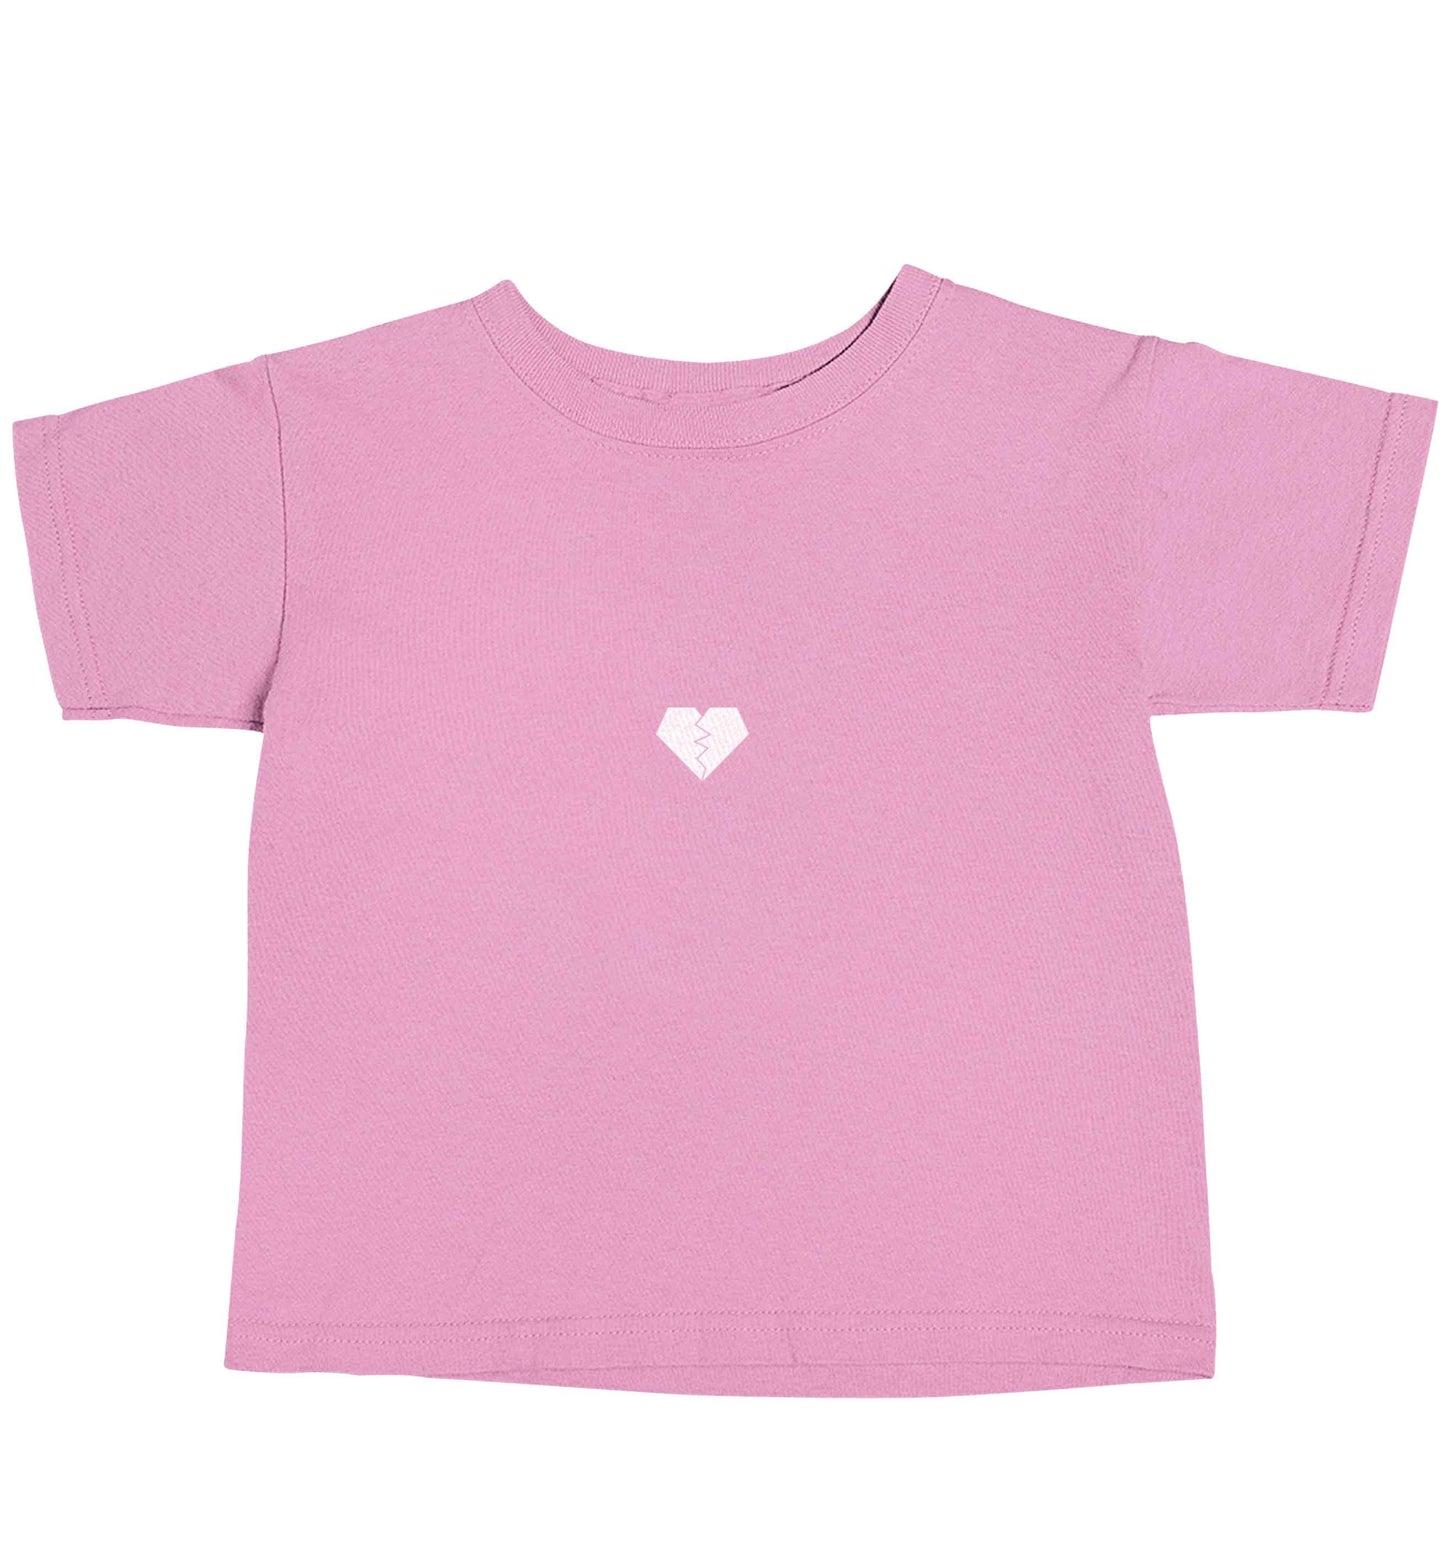 Tiny broken heart light pink baby toddler Tshirt 2 Years